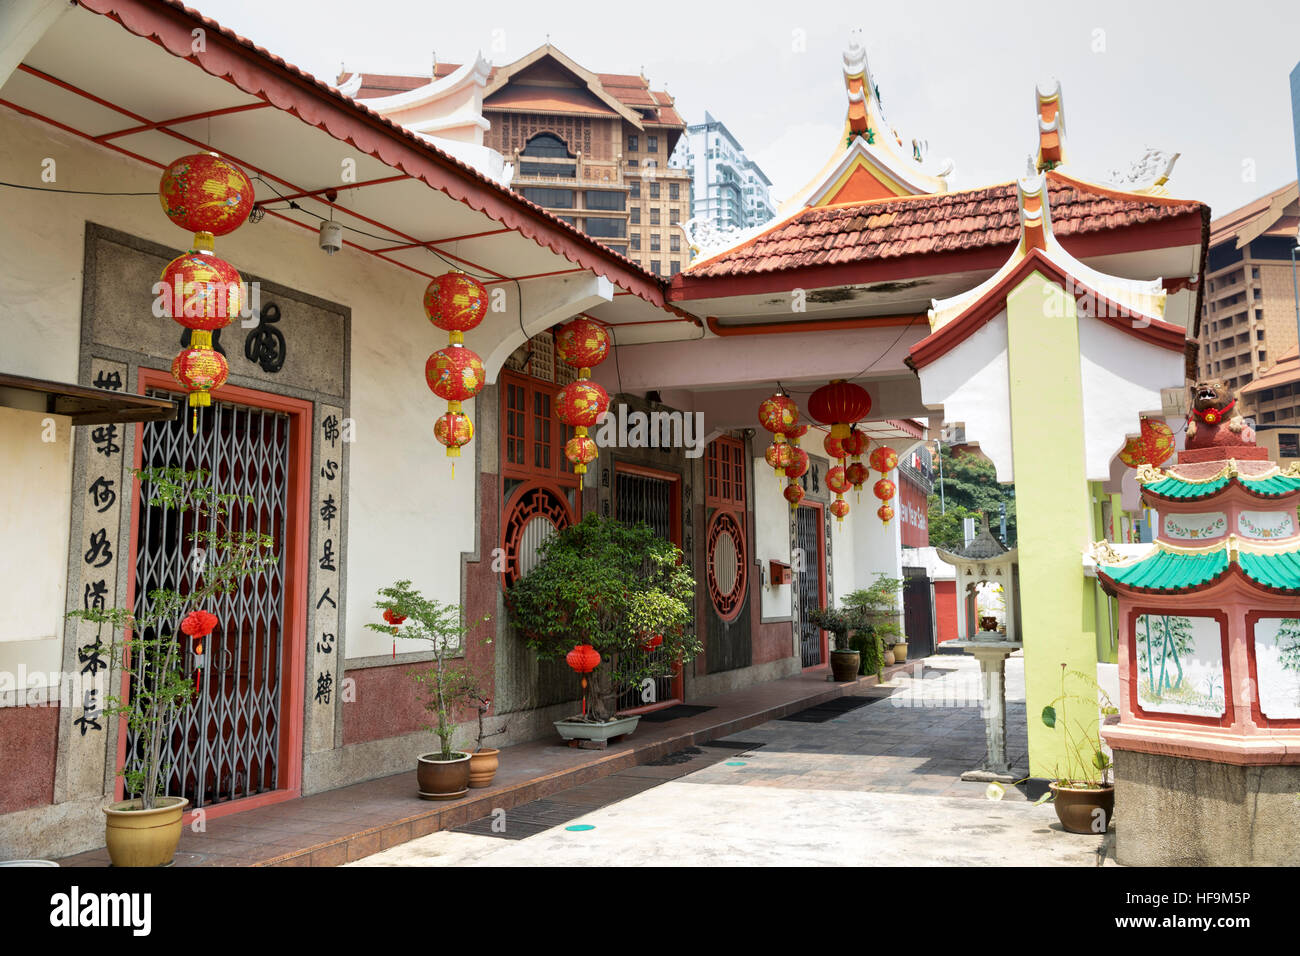 The entrance to the Jalan Imbi Chinese Temple in Kuala Lumpur Stock Photo